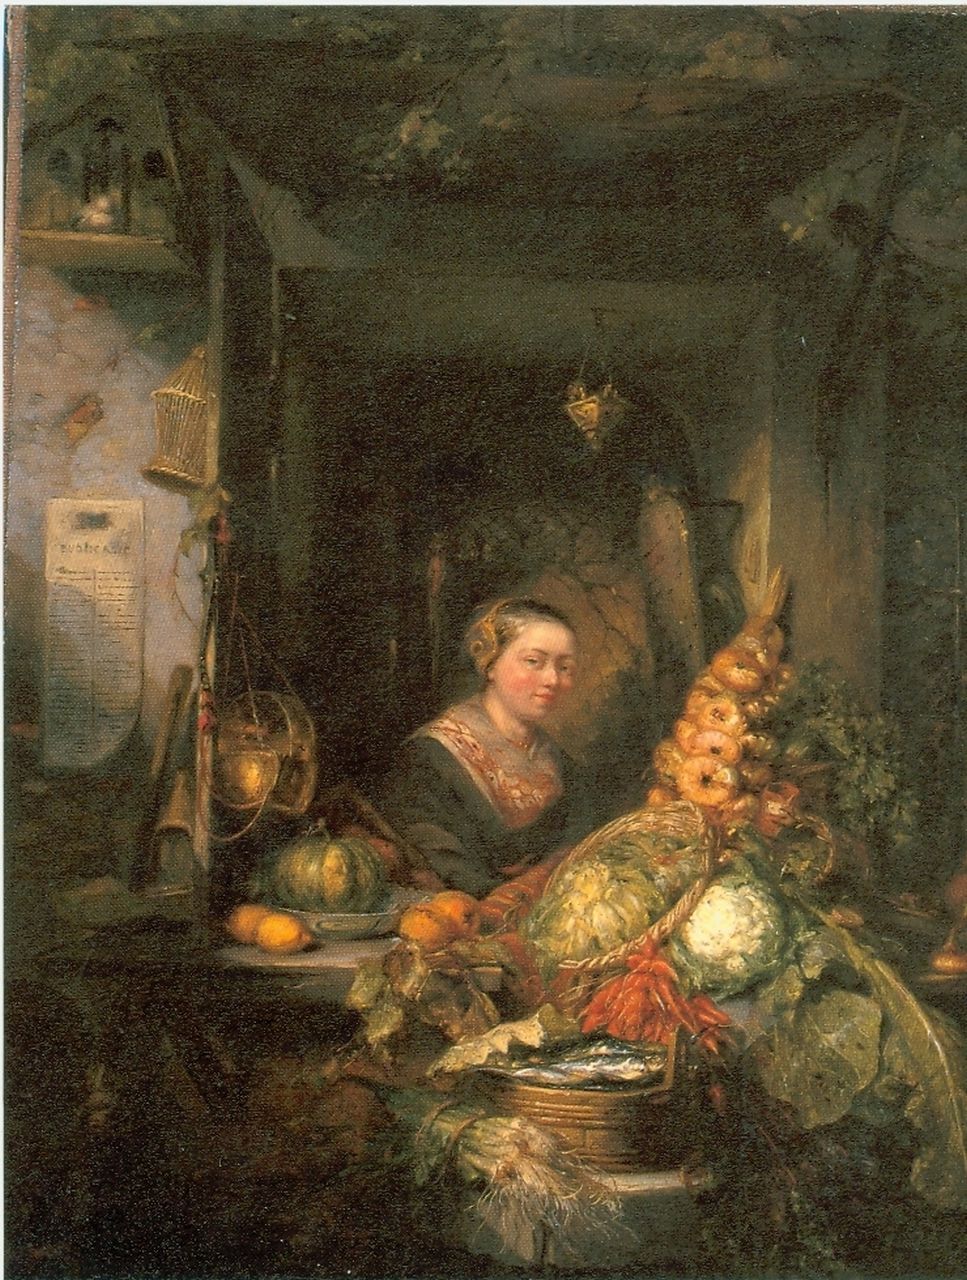 Vos M.  | Maria Vos, Vegetable-seller, Öl auf Leinwand 44,5 x 35,0 cm